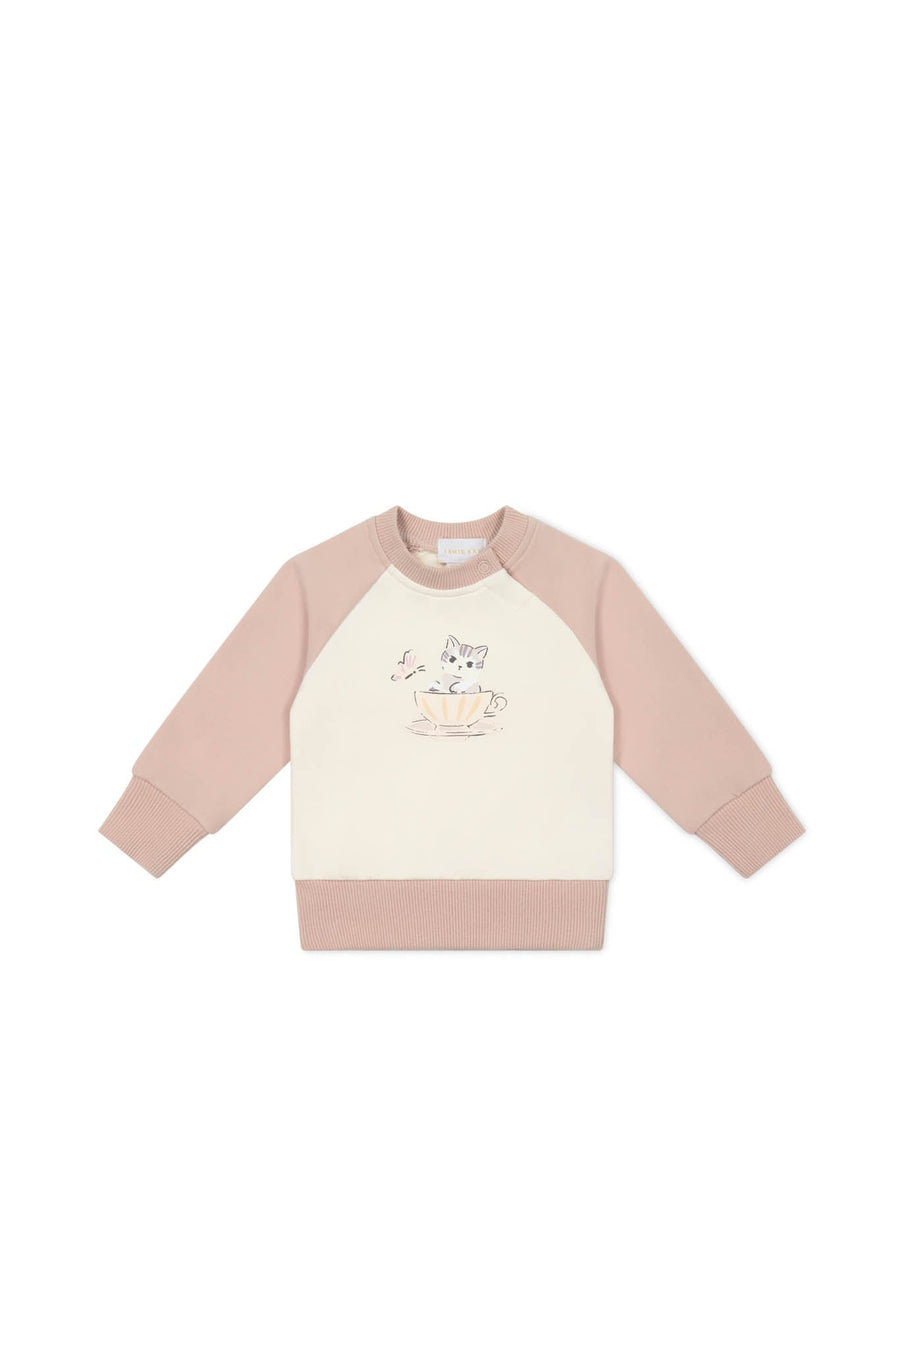 Organic Cotton Tao Sweatshirt - Moon's Garden Dusky Rose Childrens Sweatshirt from Jamie Kay USA